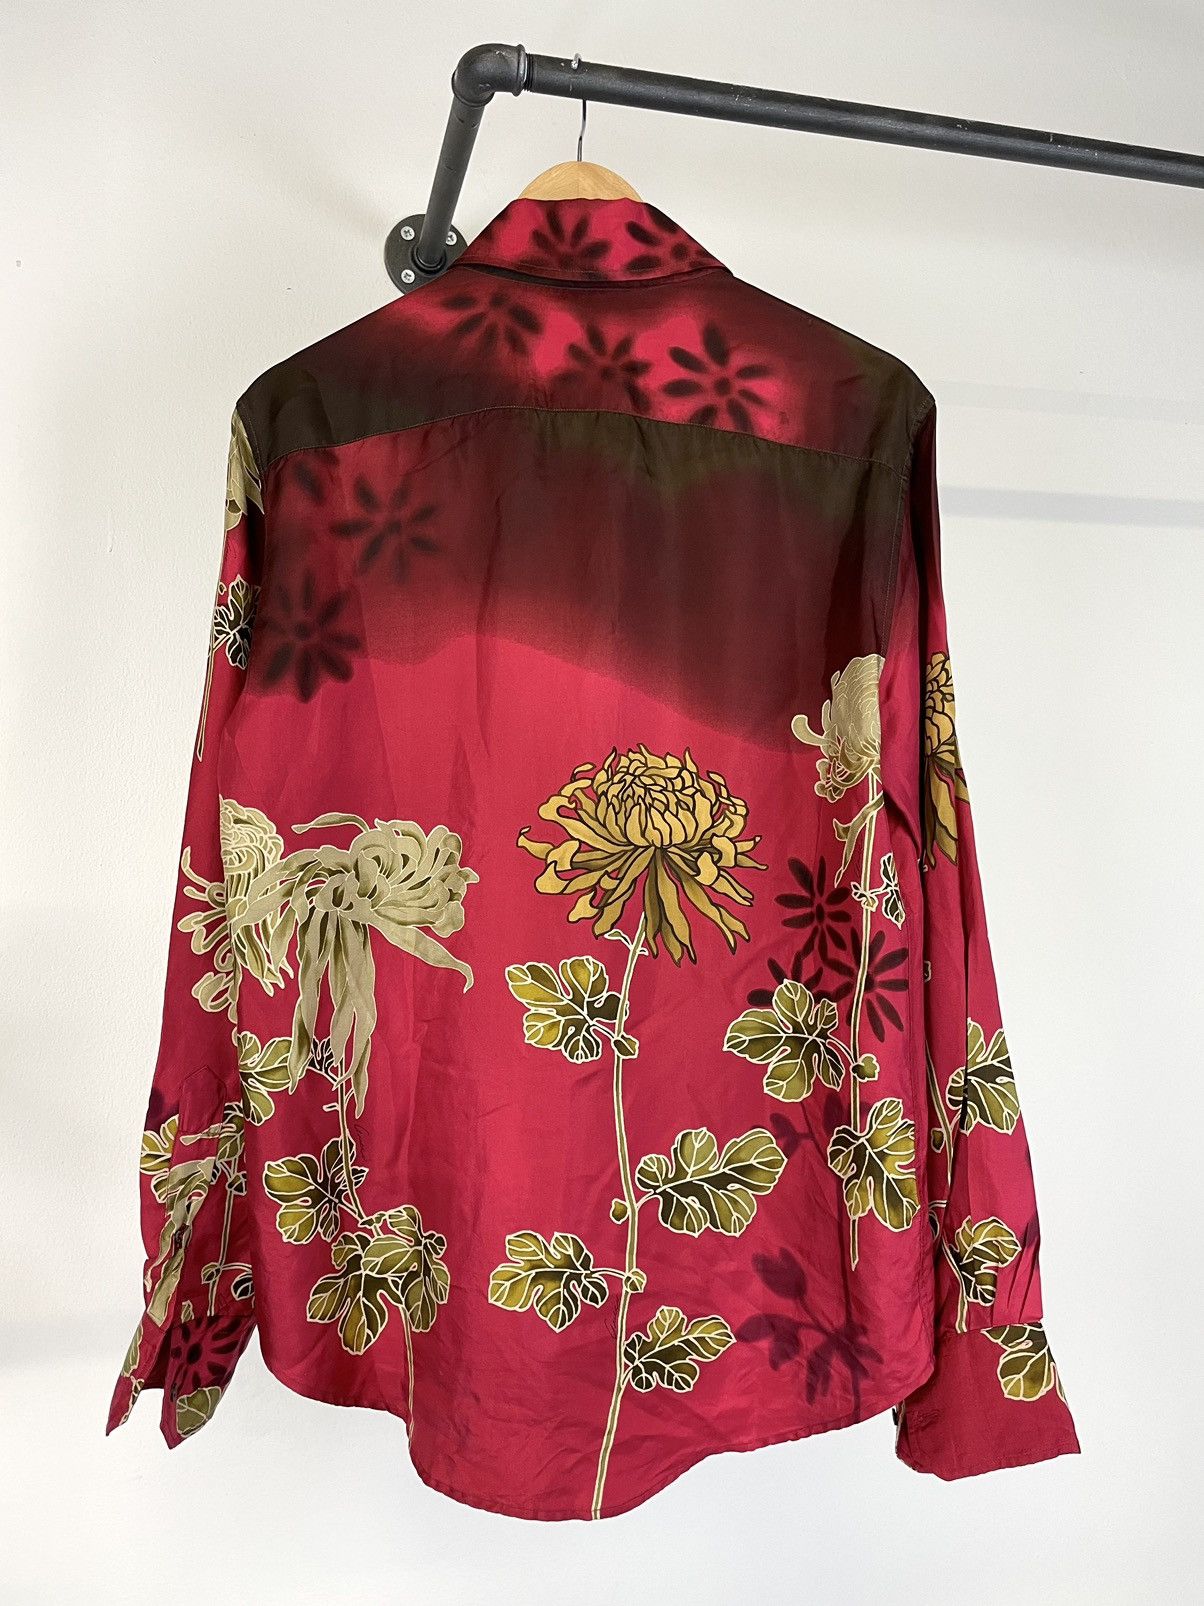 Gucci SS2001 Tom Ford Chrysanthemum floral Print Silk Shirt rare Size US M / EU 48-50 / 2 - 4 Thumbnail